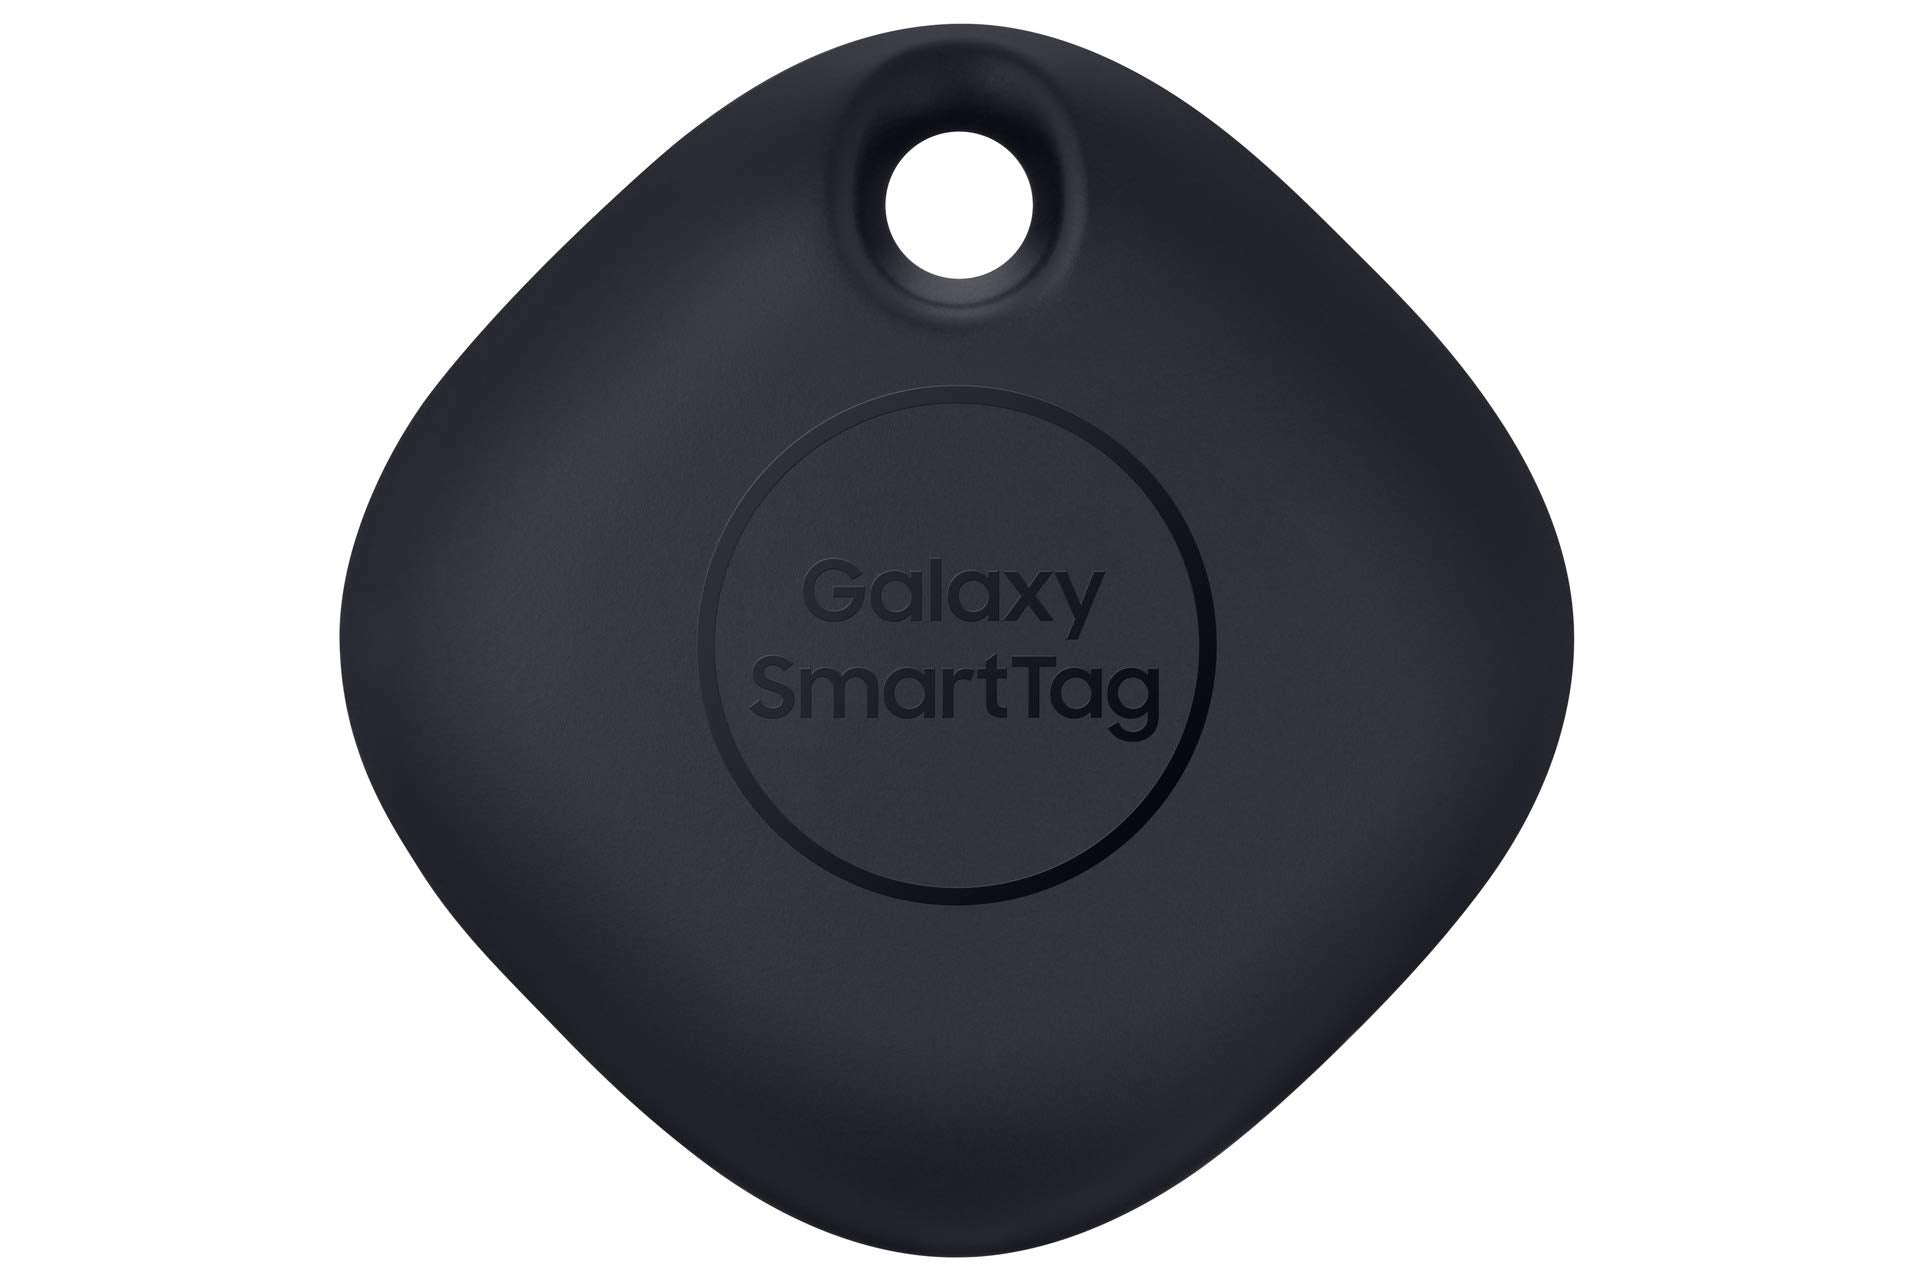 Samsung Galaxy SmartTag Bluetooth Item Finder and Key Finder, 120m Finding Range, 1 Pack, Black (UK Version)